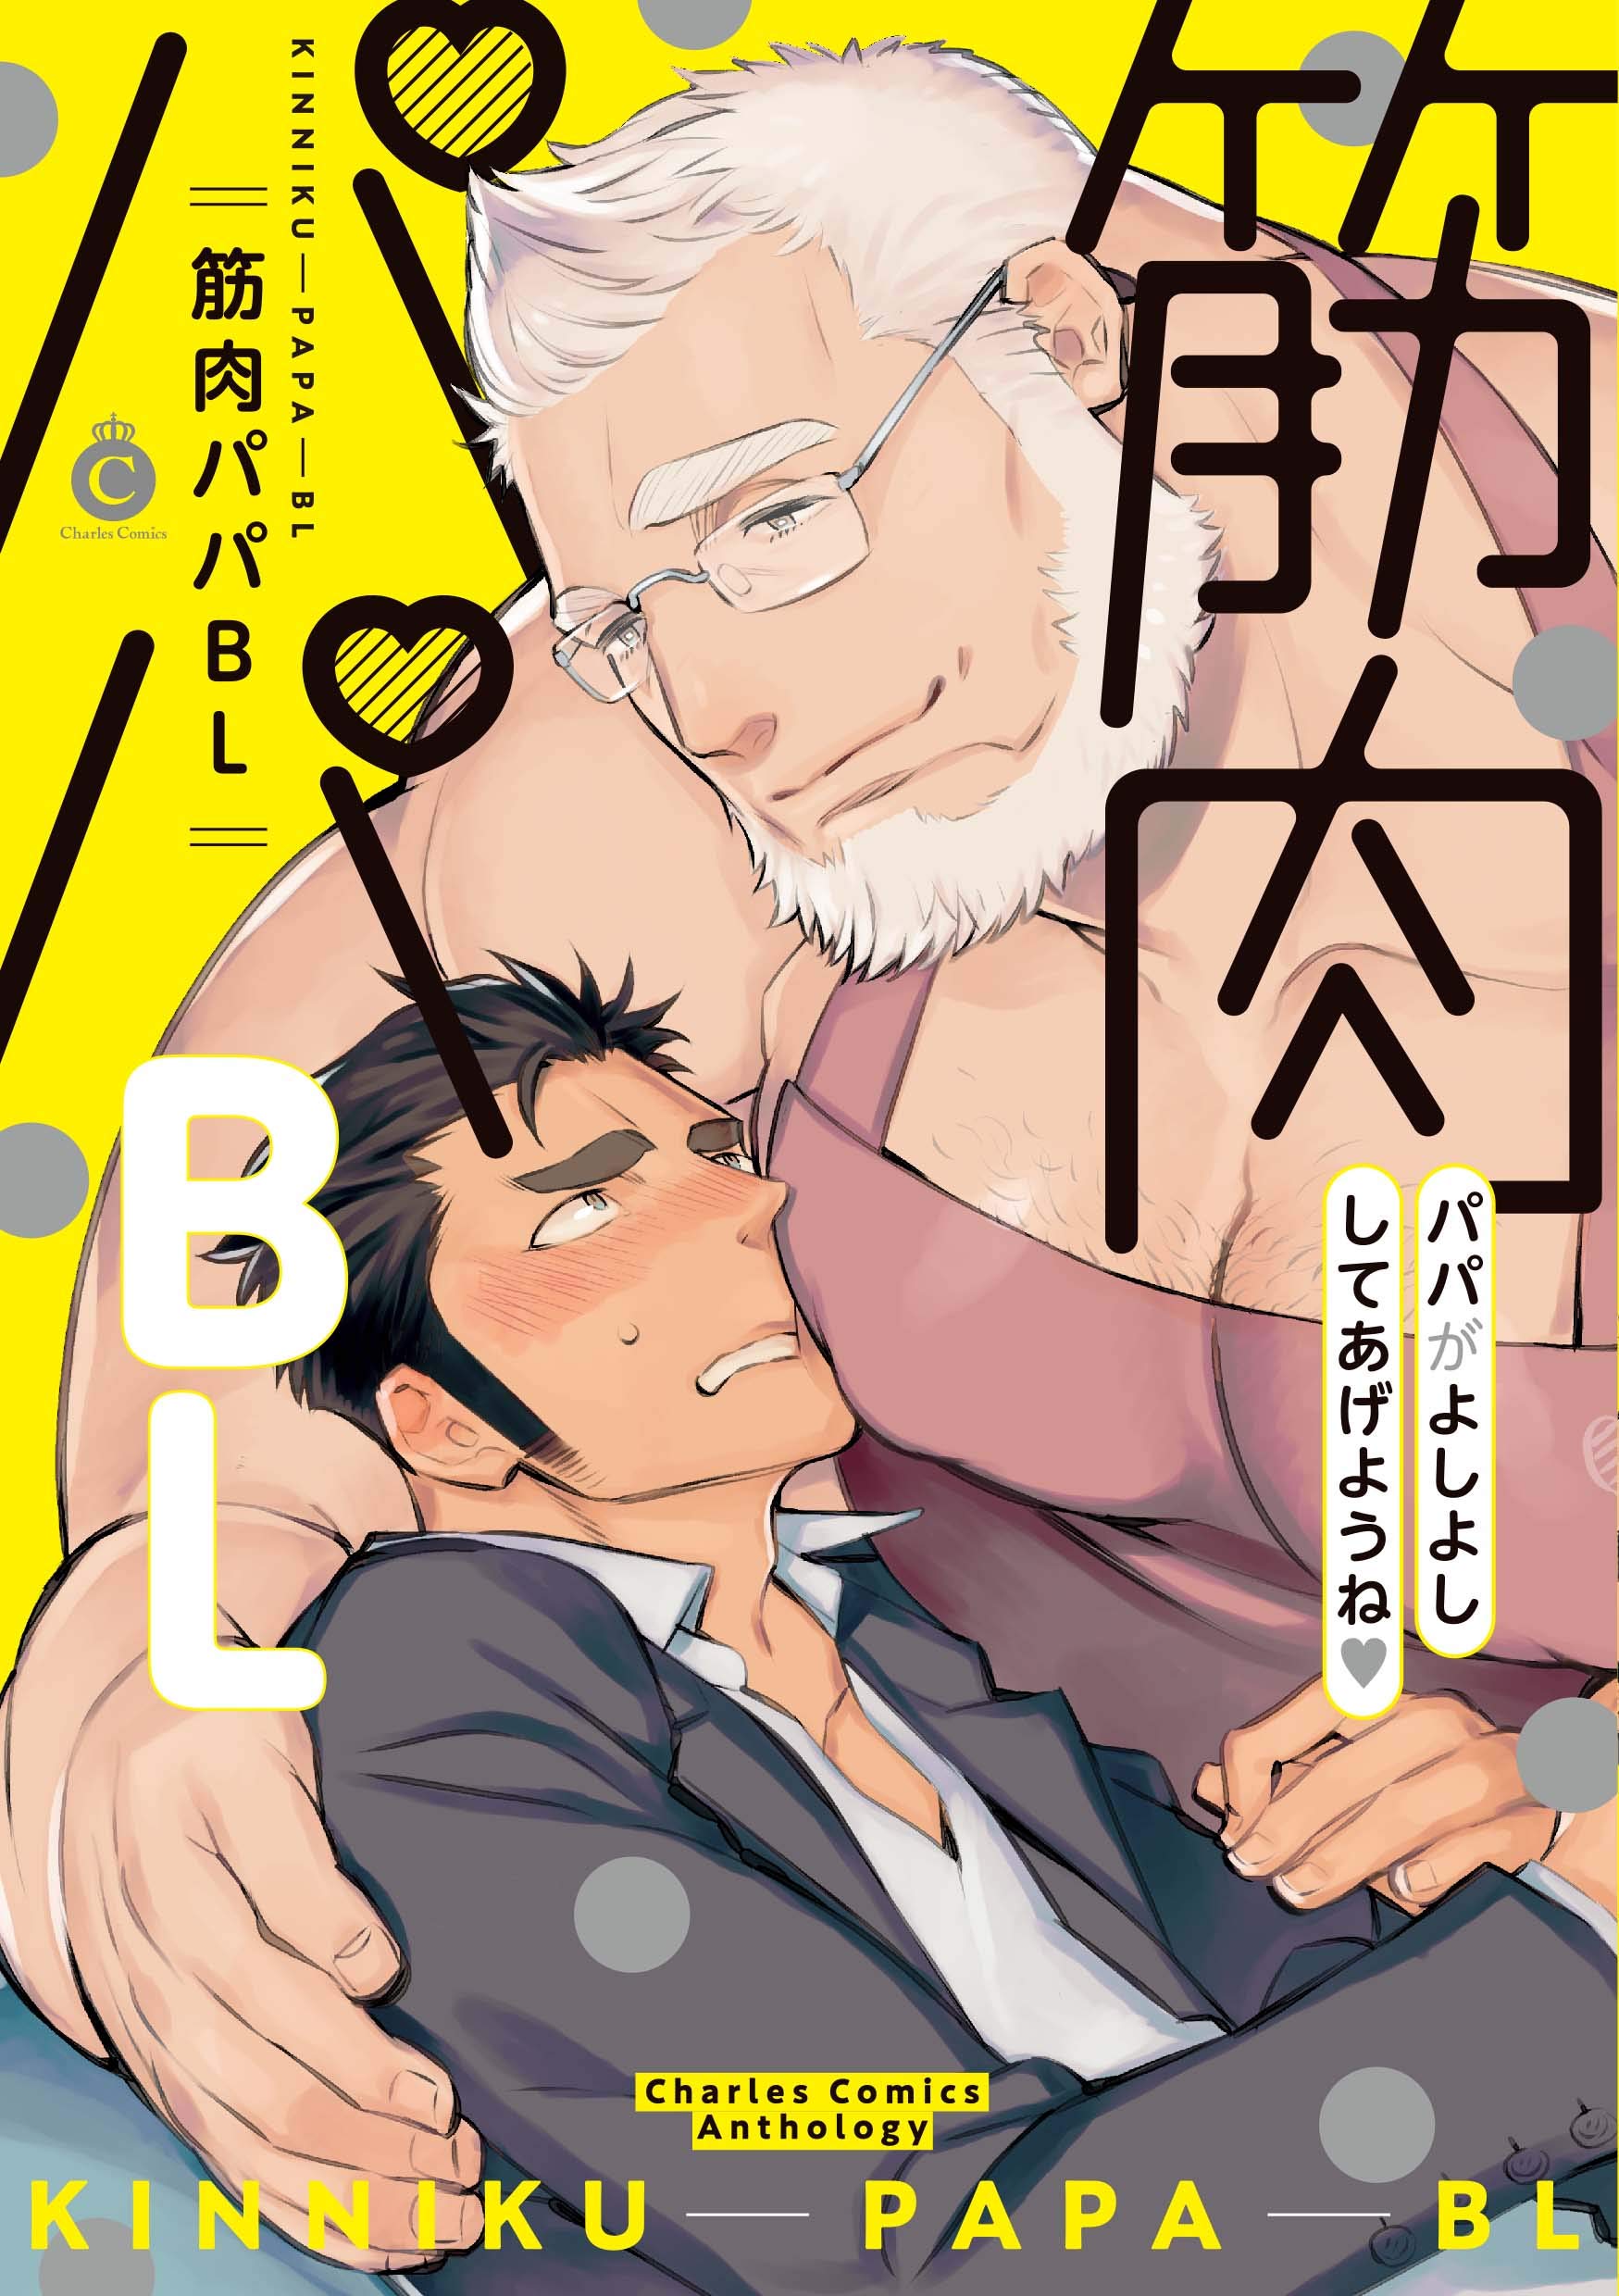 Boys Love (Yaoi) Comics - Kinniku Papa BL (筋肉パパBL (Charles Comics)) / Kijima Hyougo